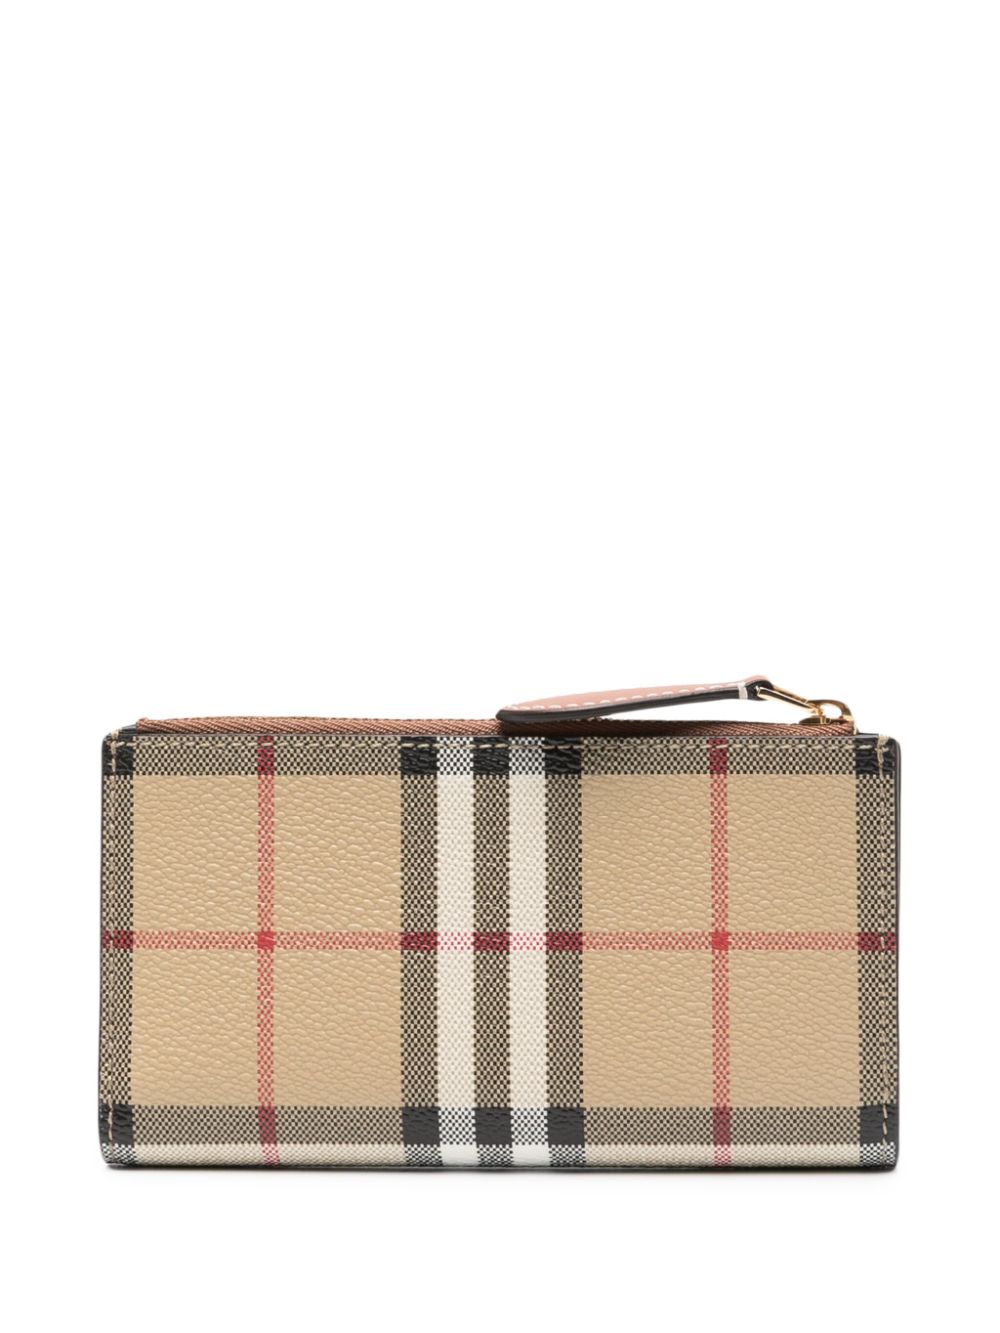 Burberry Vintage Check-pattern bi-fold wallet - Beige